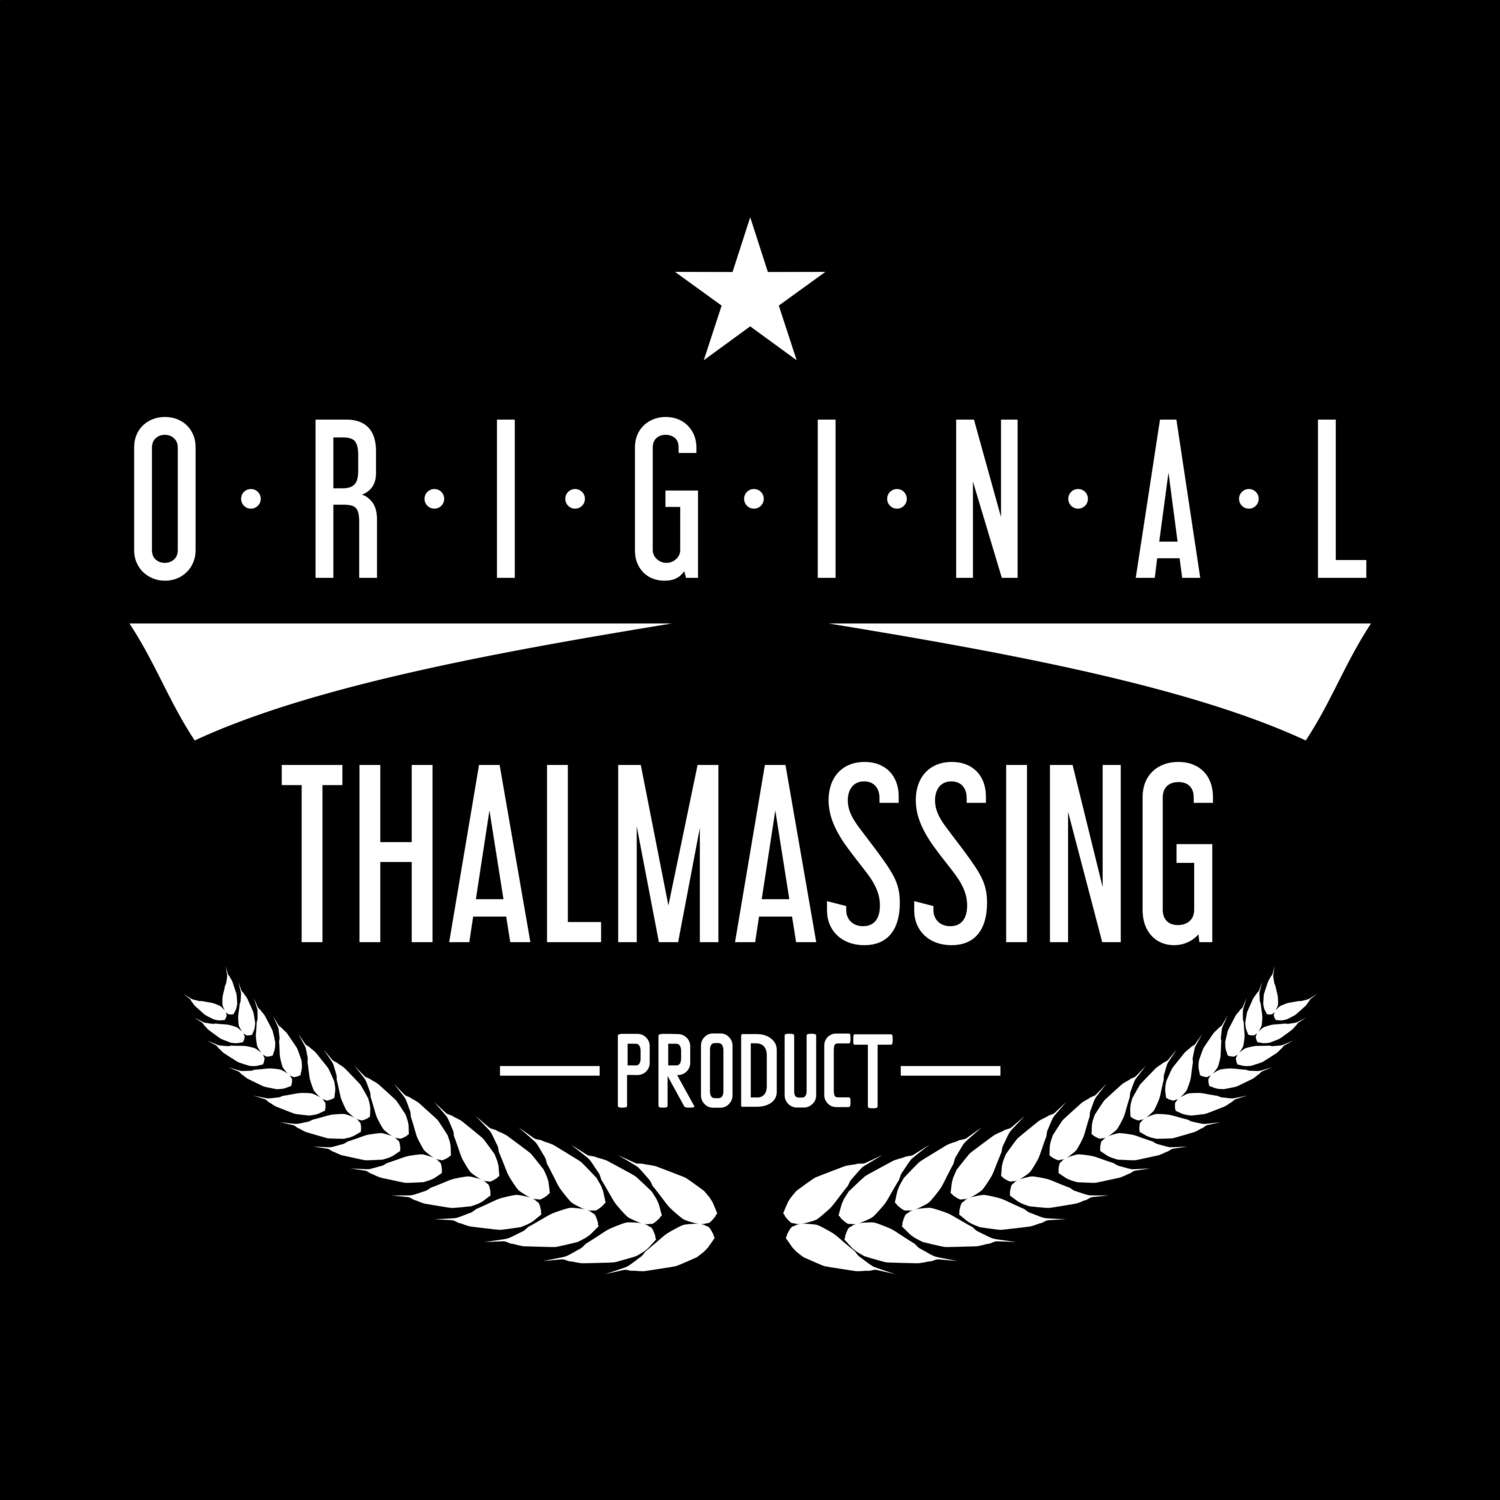 Thalmassing T-Shirt »Original Product«